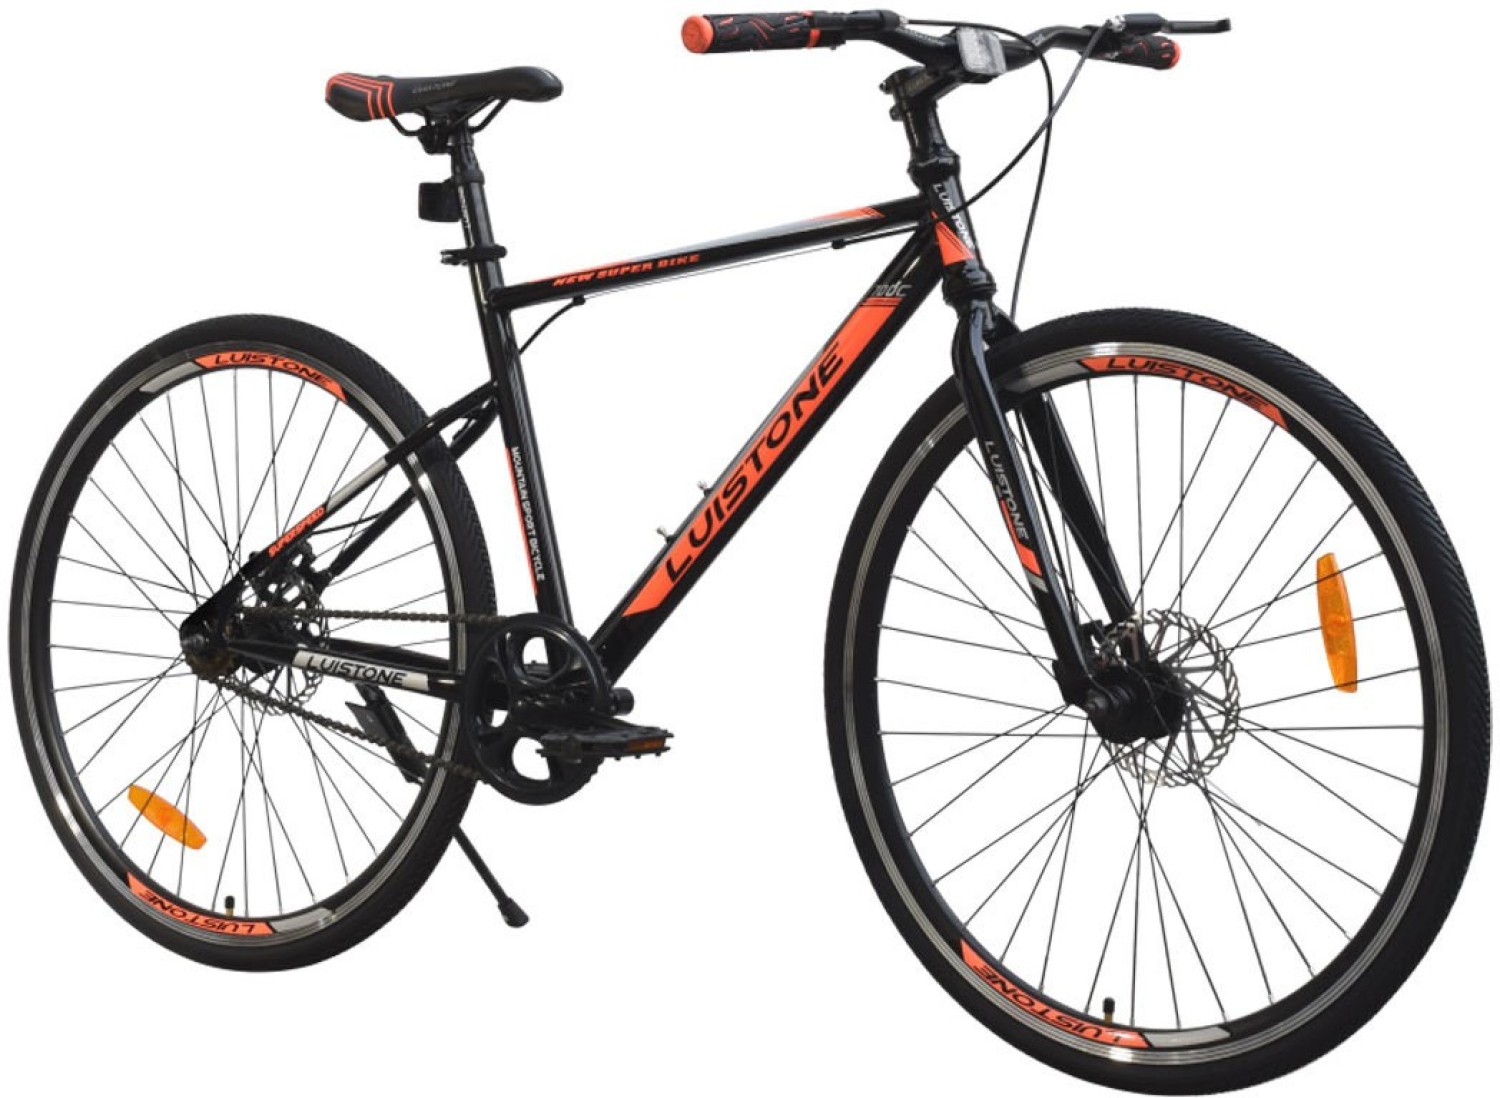 T-LUISTONE Cycle with Dual Disc Brake /Rigid Suspension, Single Speed (Blue-Black) 700C T Hybrid Cycle /City Bike (Single Speed, Orange, Black)